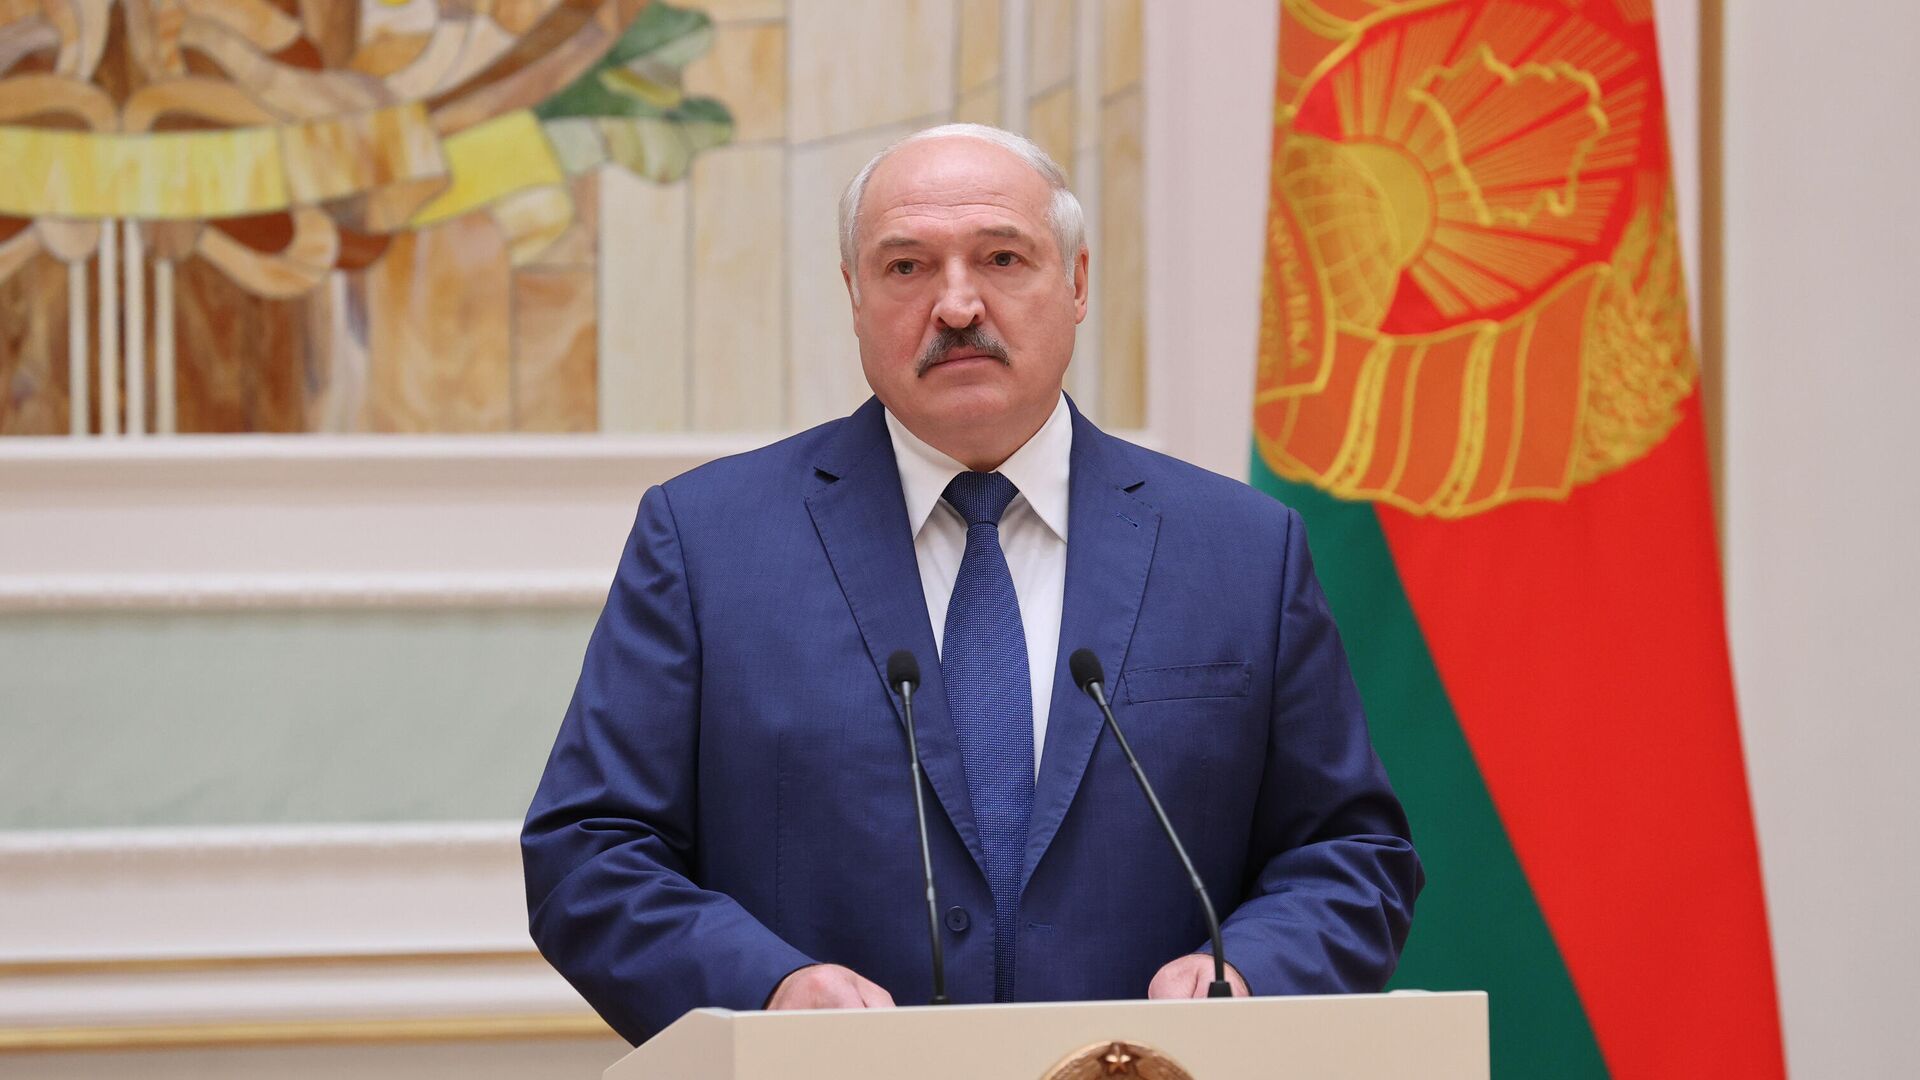 Baltarusijos prezidentas Aleksandras Lukašenka - Sputnik Lietuva, 1920, 19.07.2021